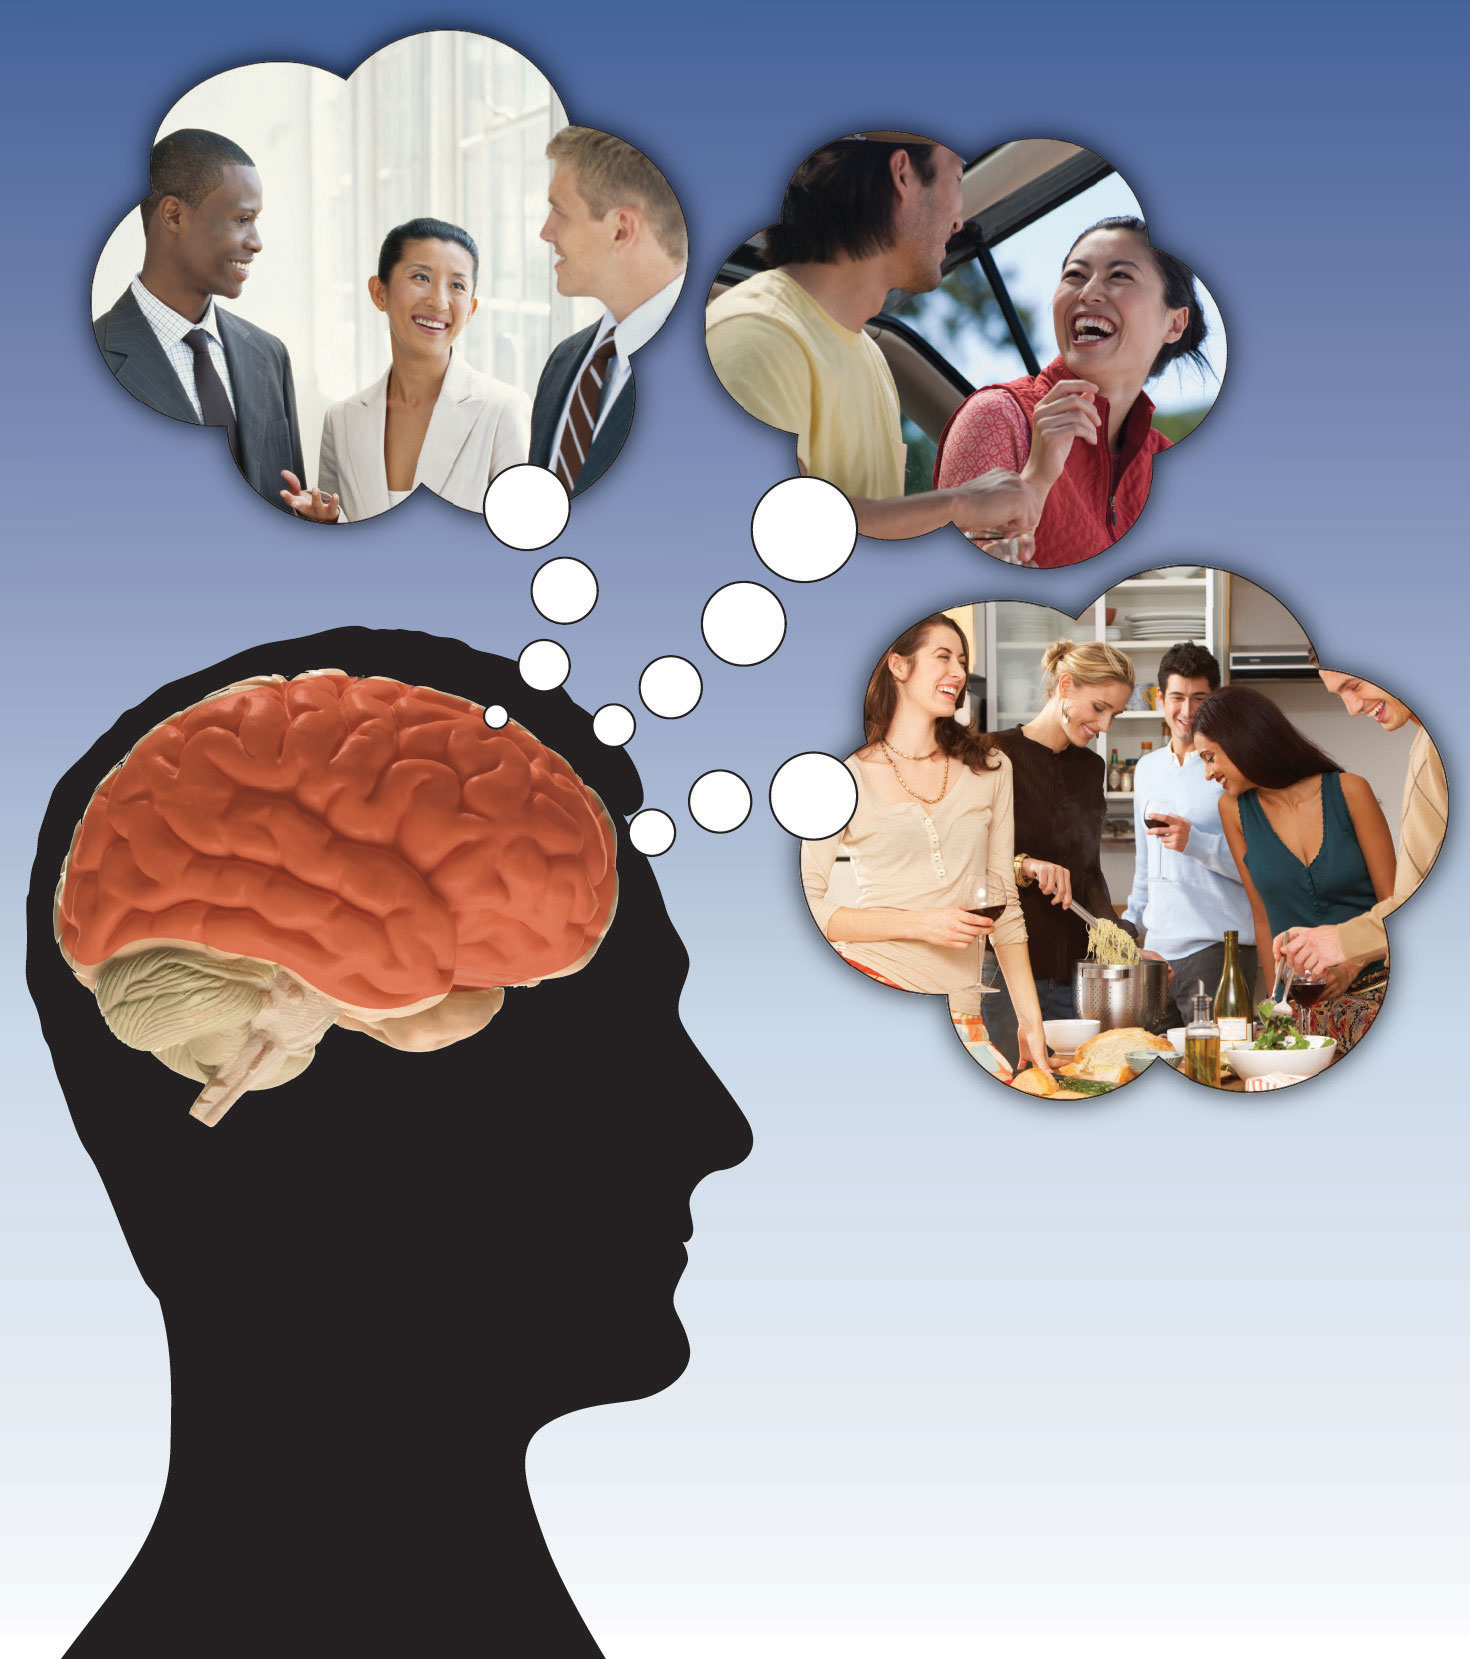 Cognitive Psychology And Human Behavior